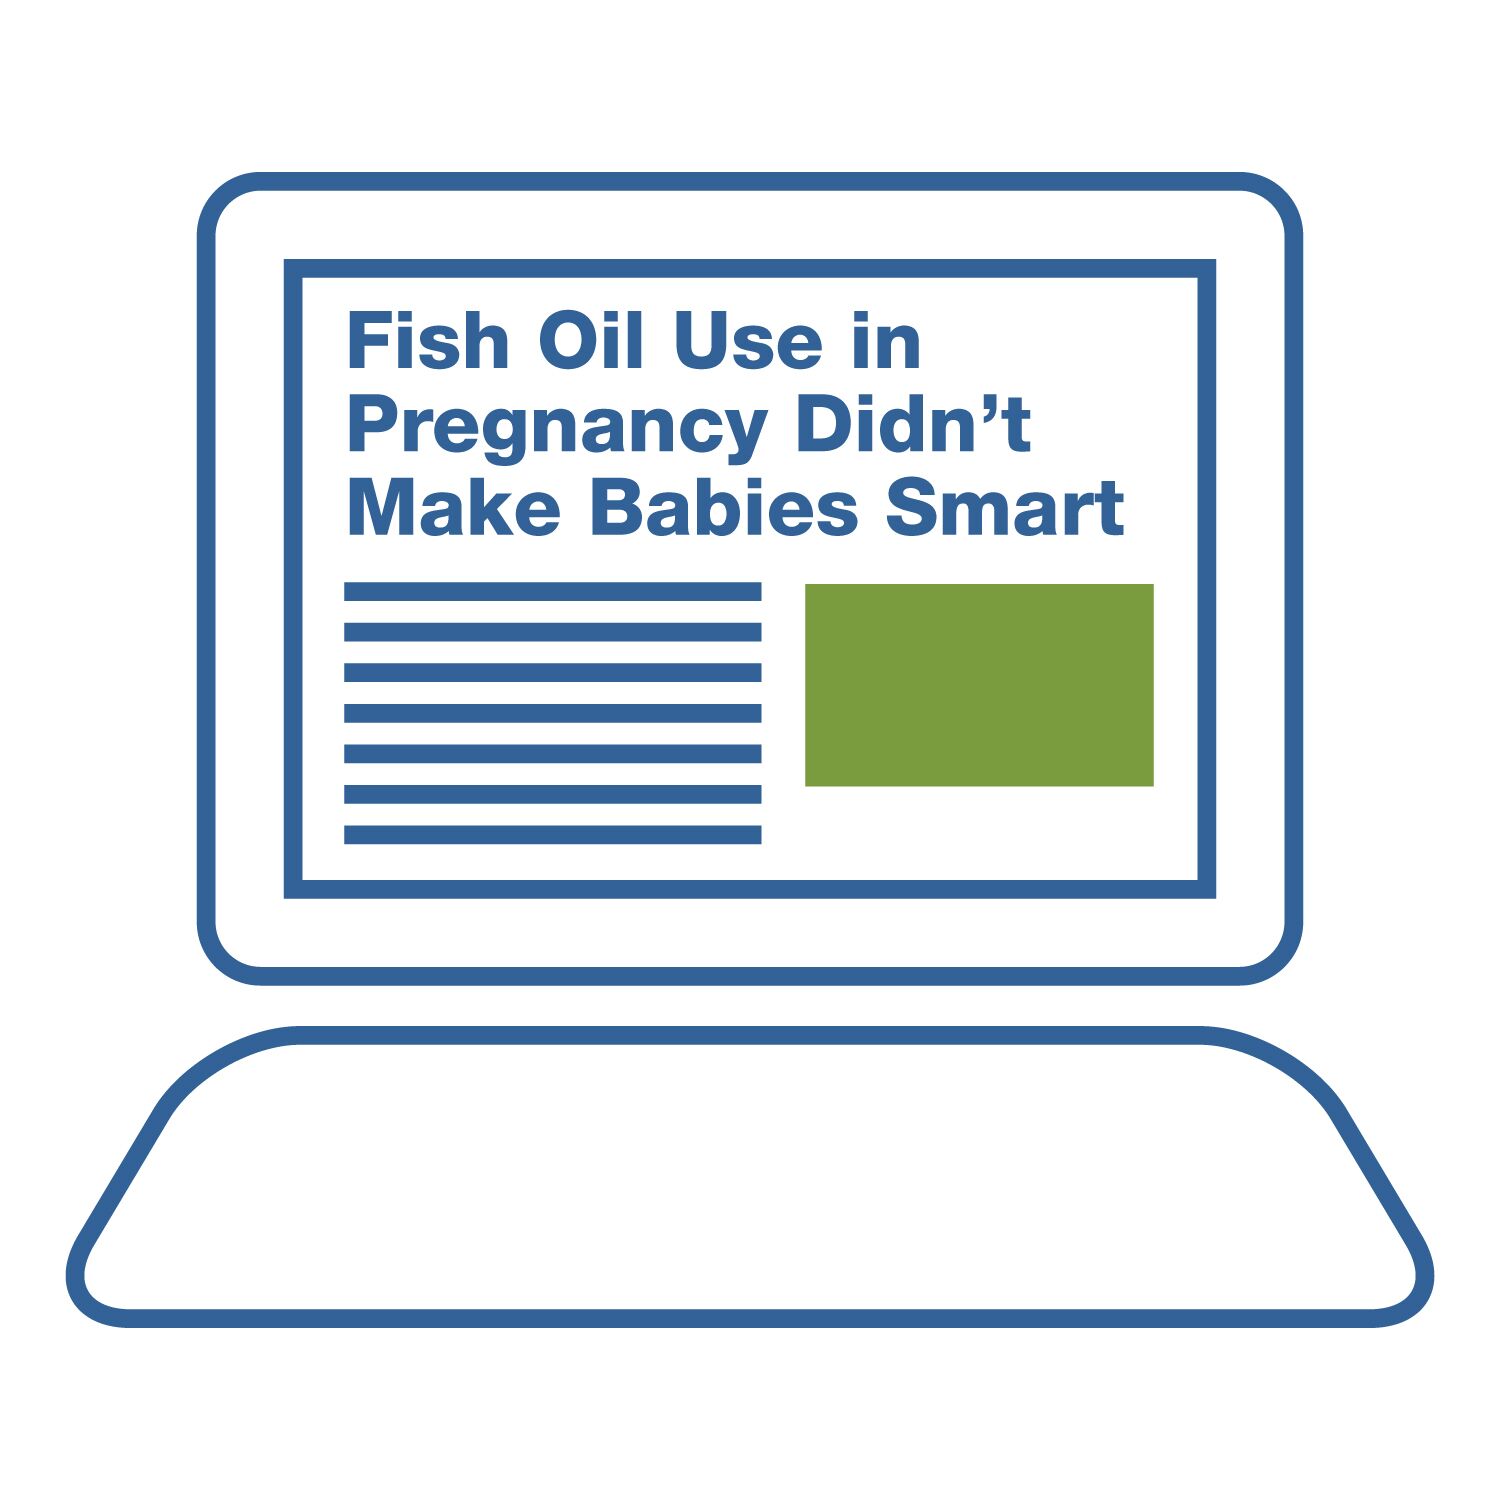 Headline: Fish oil use in pregnancy didn't make babies smart